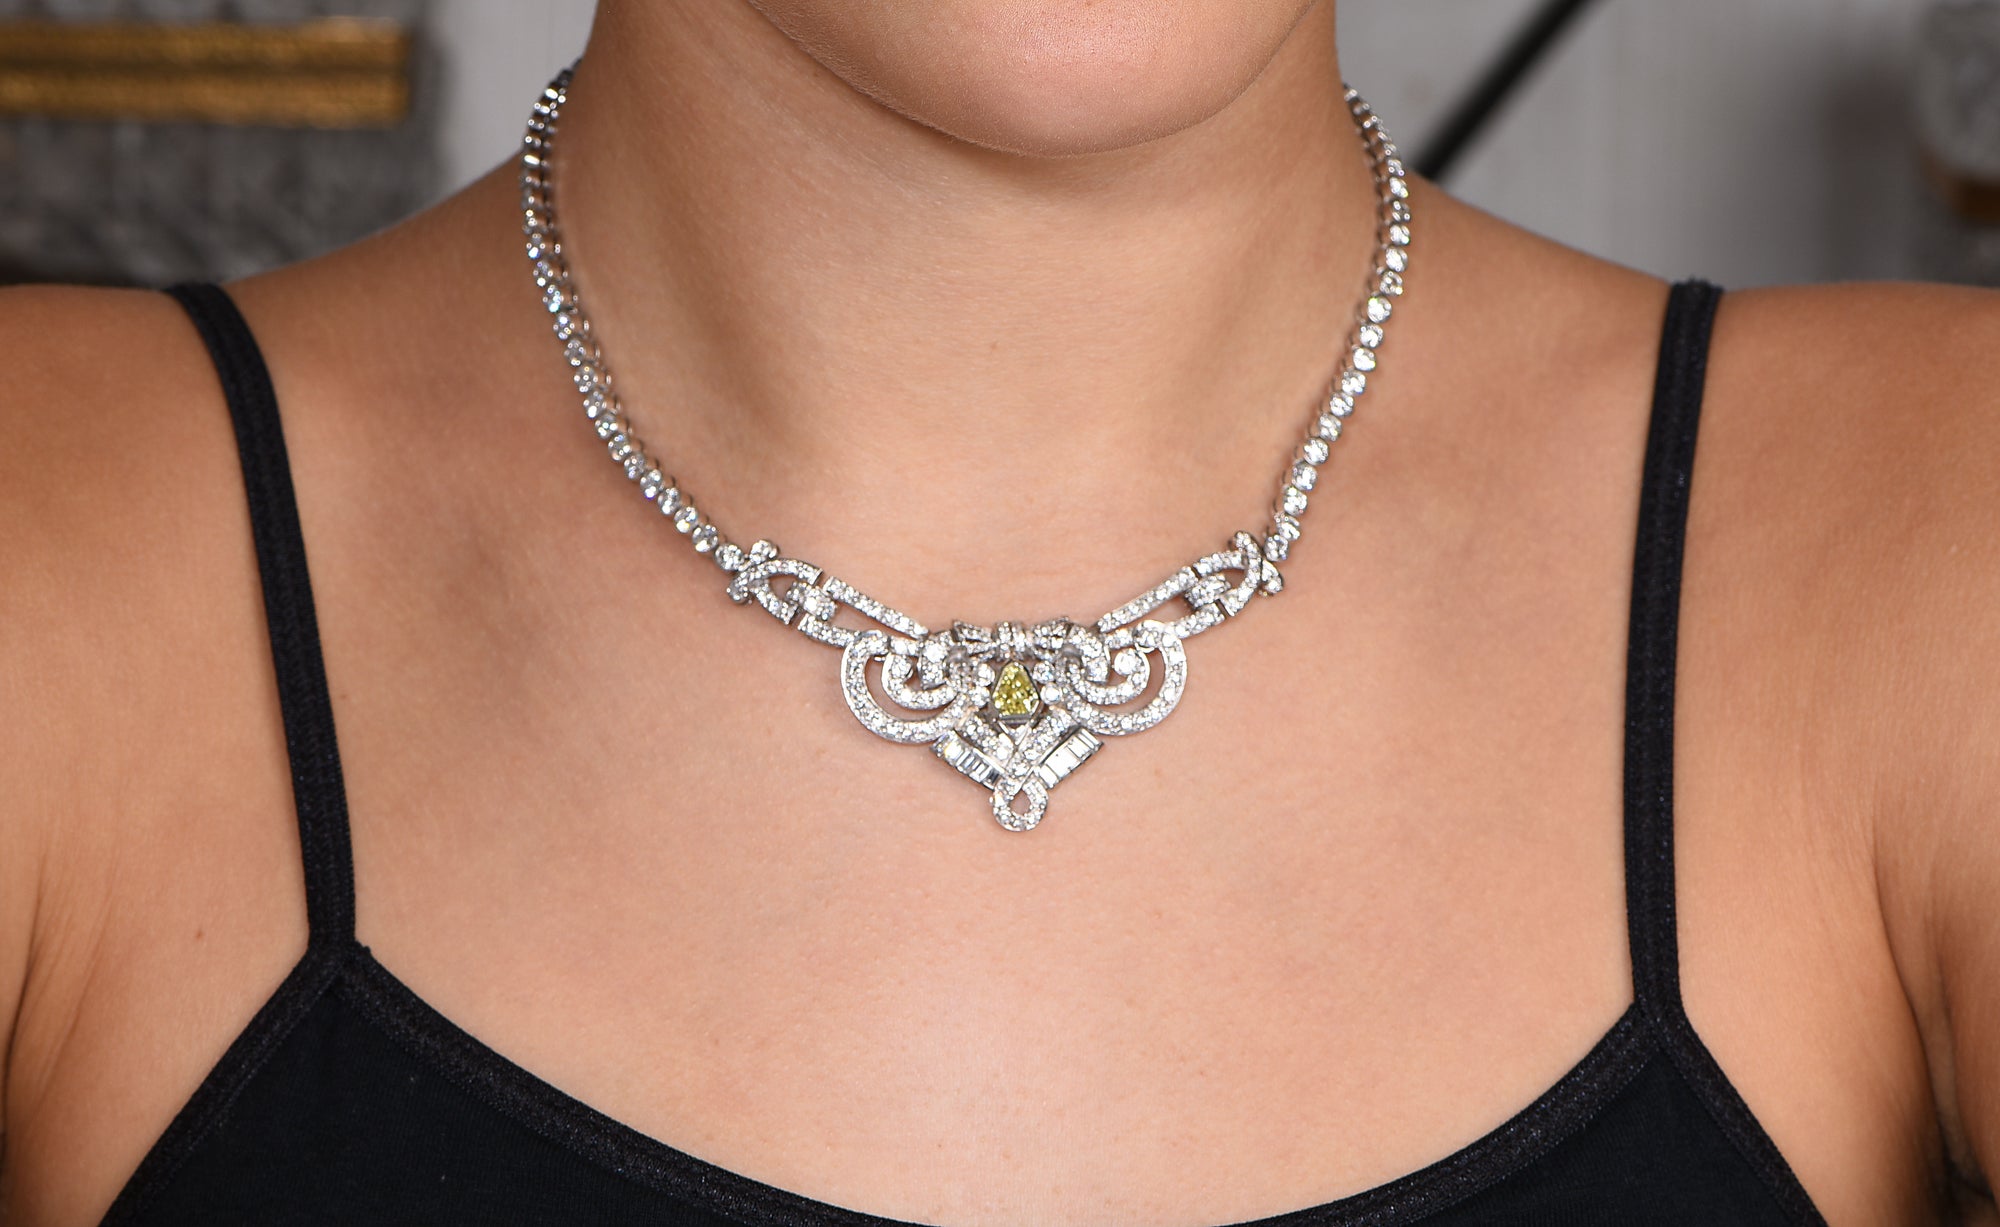 Diamond pendant - diamond necklace - 585 14 carat gold